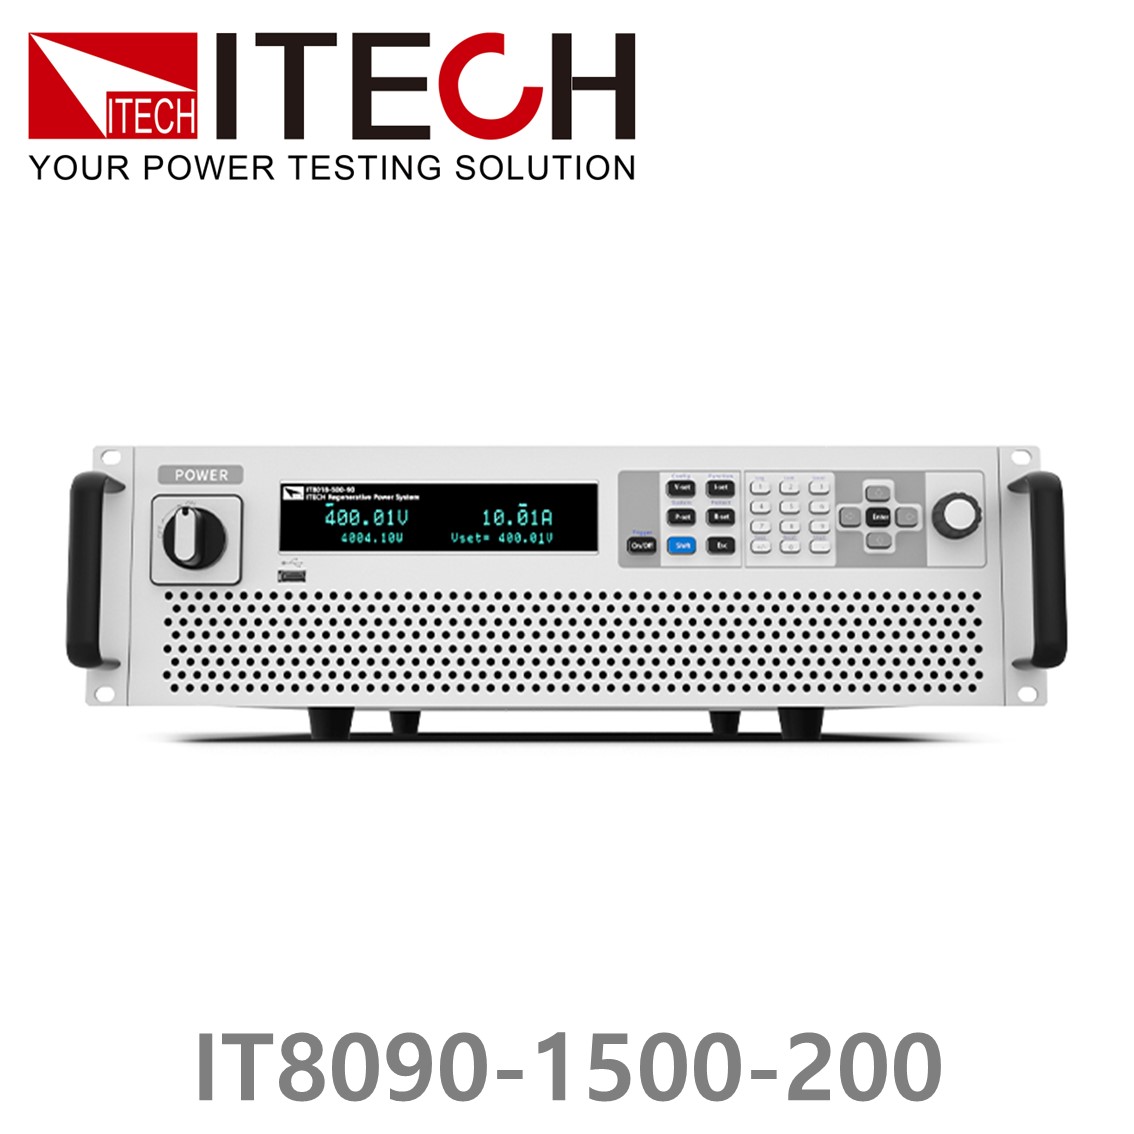 [ ITECH ] IT8090-1500-200  회생형 DC전자로드, DC전자부하 1500V/200A/90kW (27U)